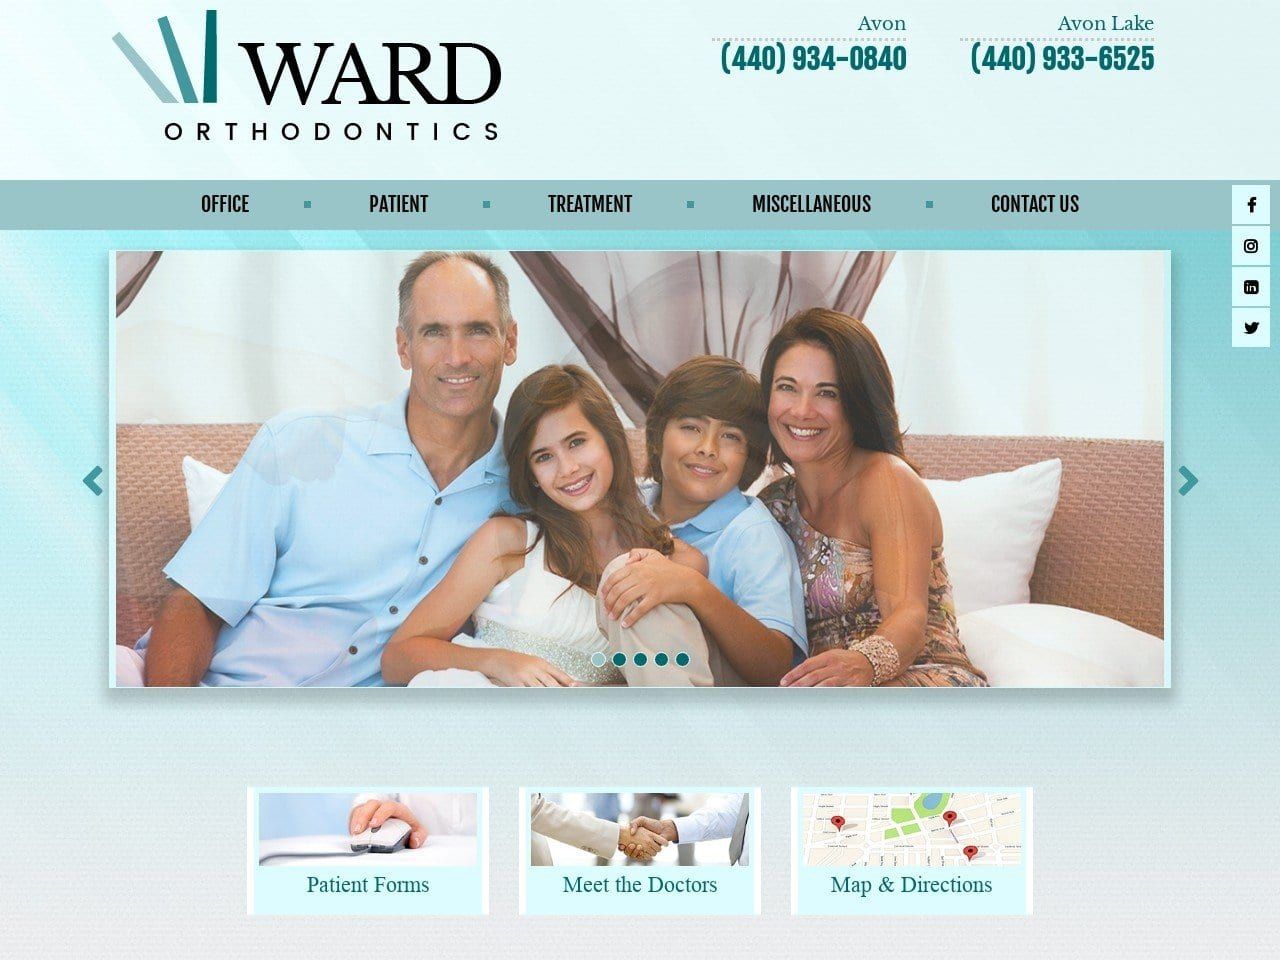 Ward Orthodontics Website Screenshot from ward-orthodontics.com